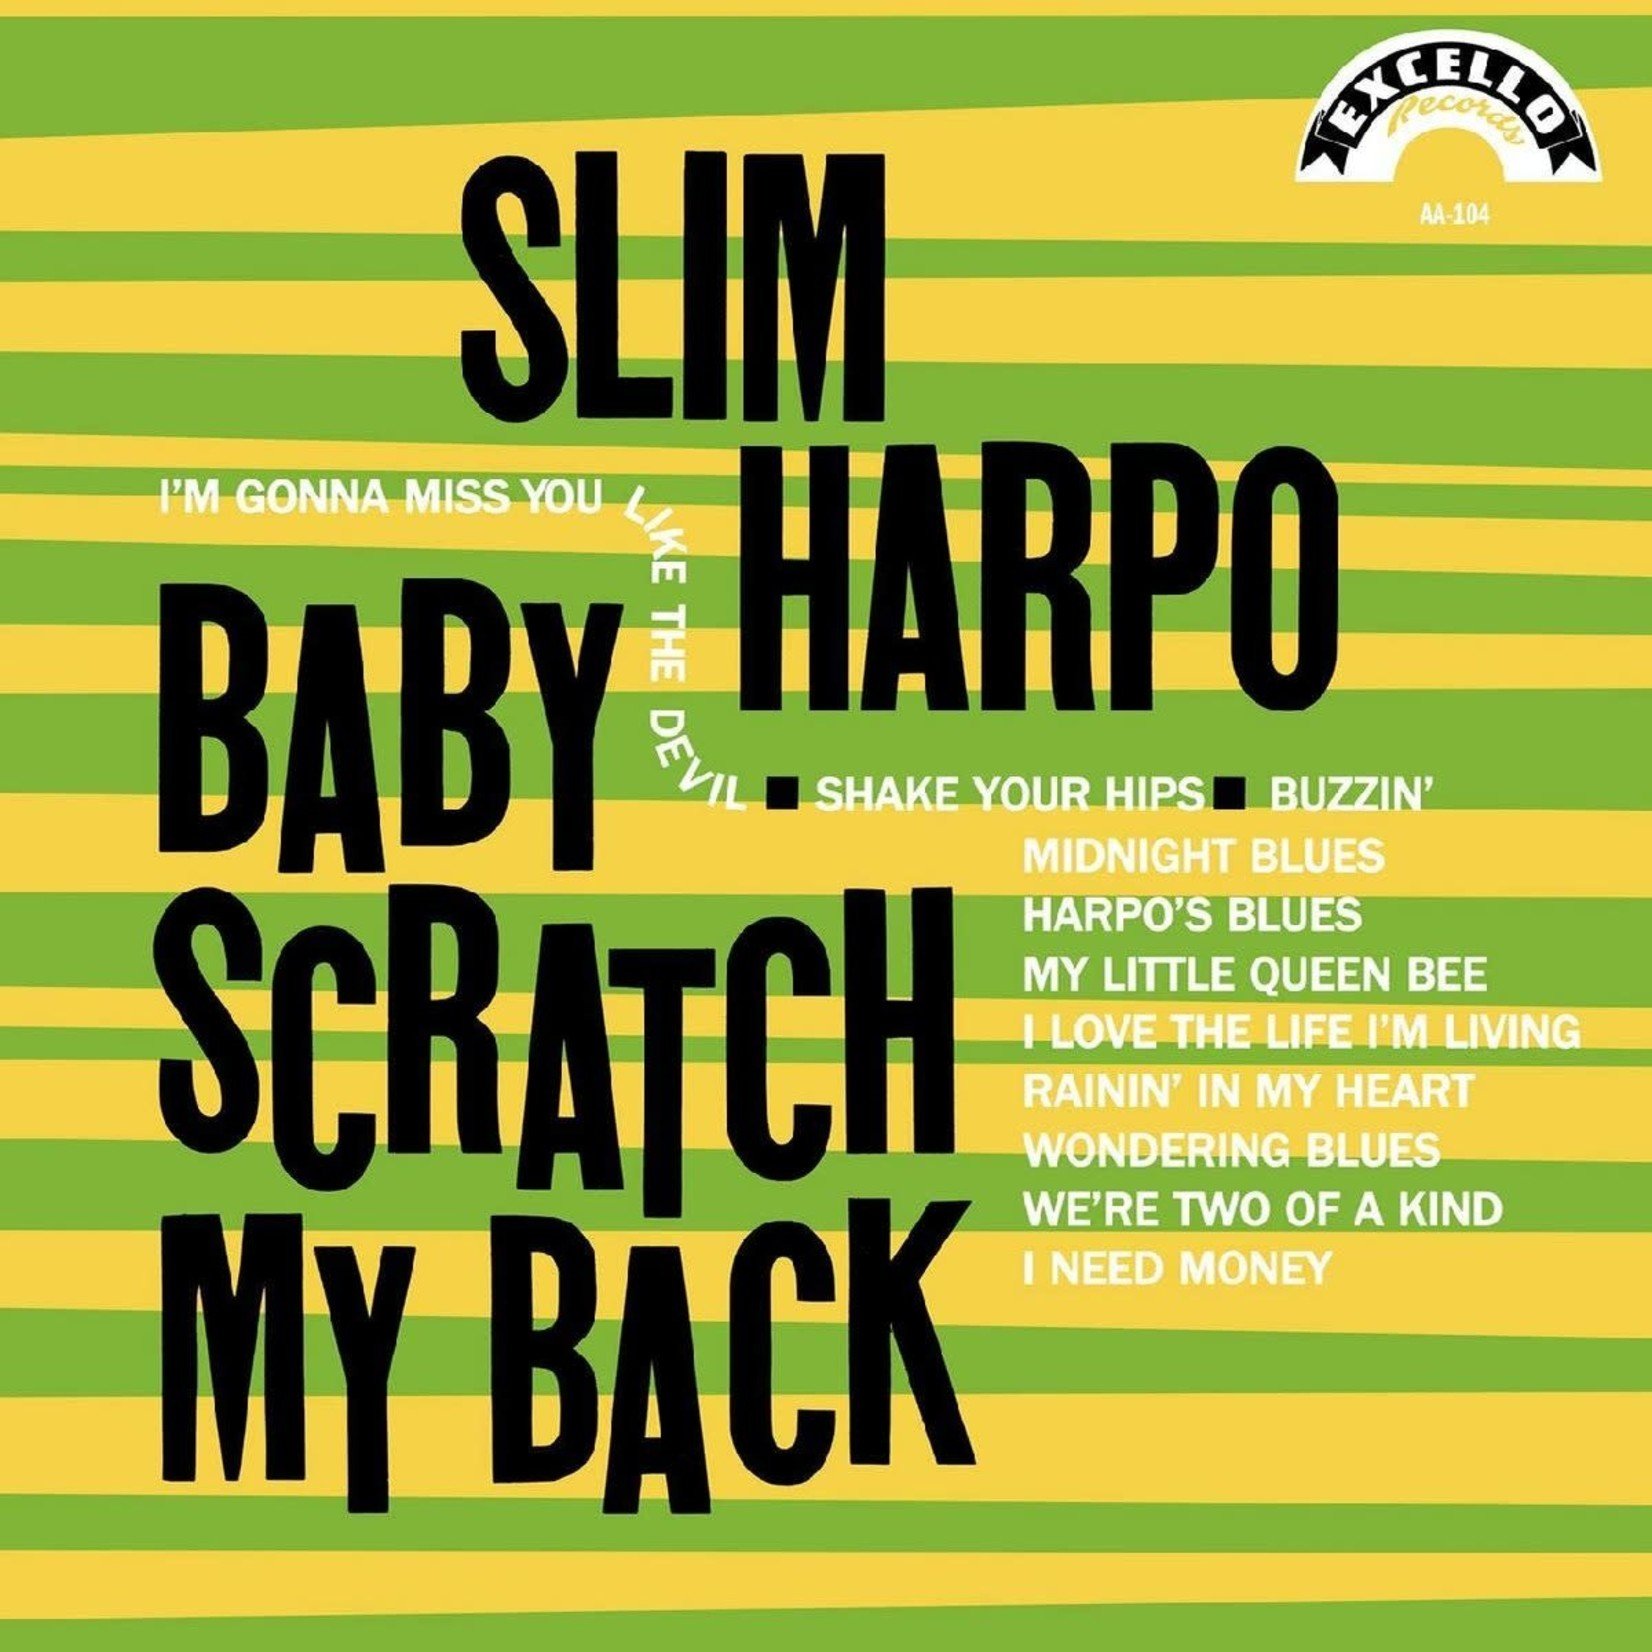 [New] Slim Harpo - Baby Scratch My Back